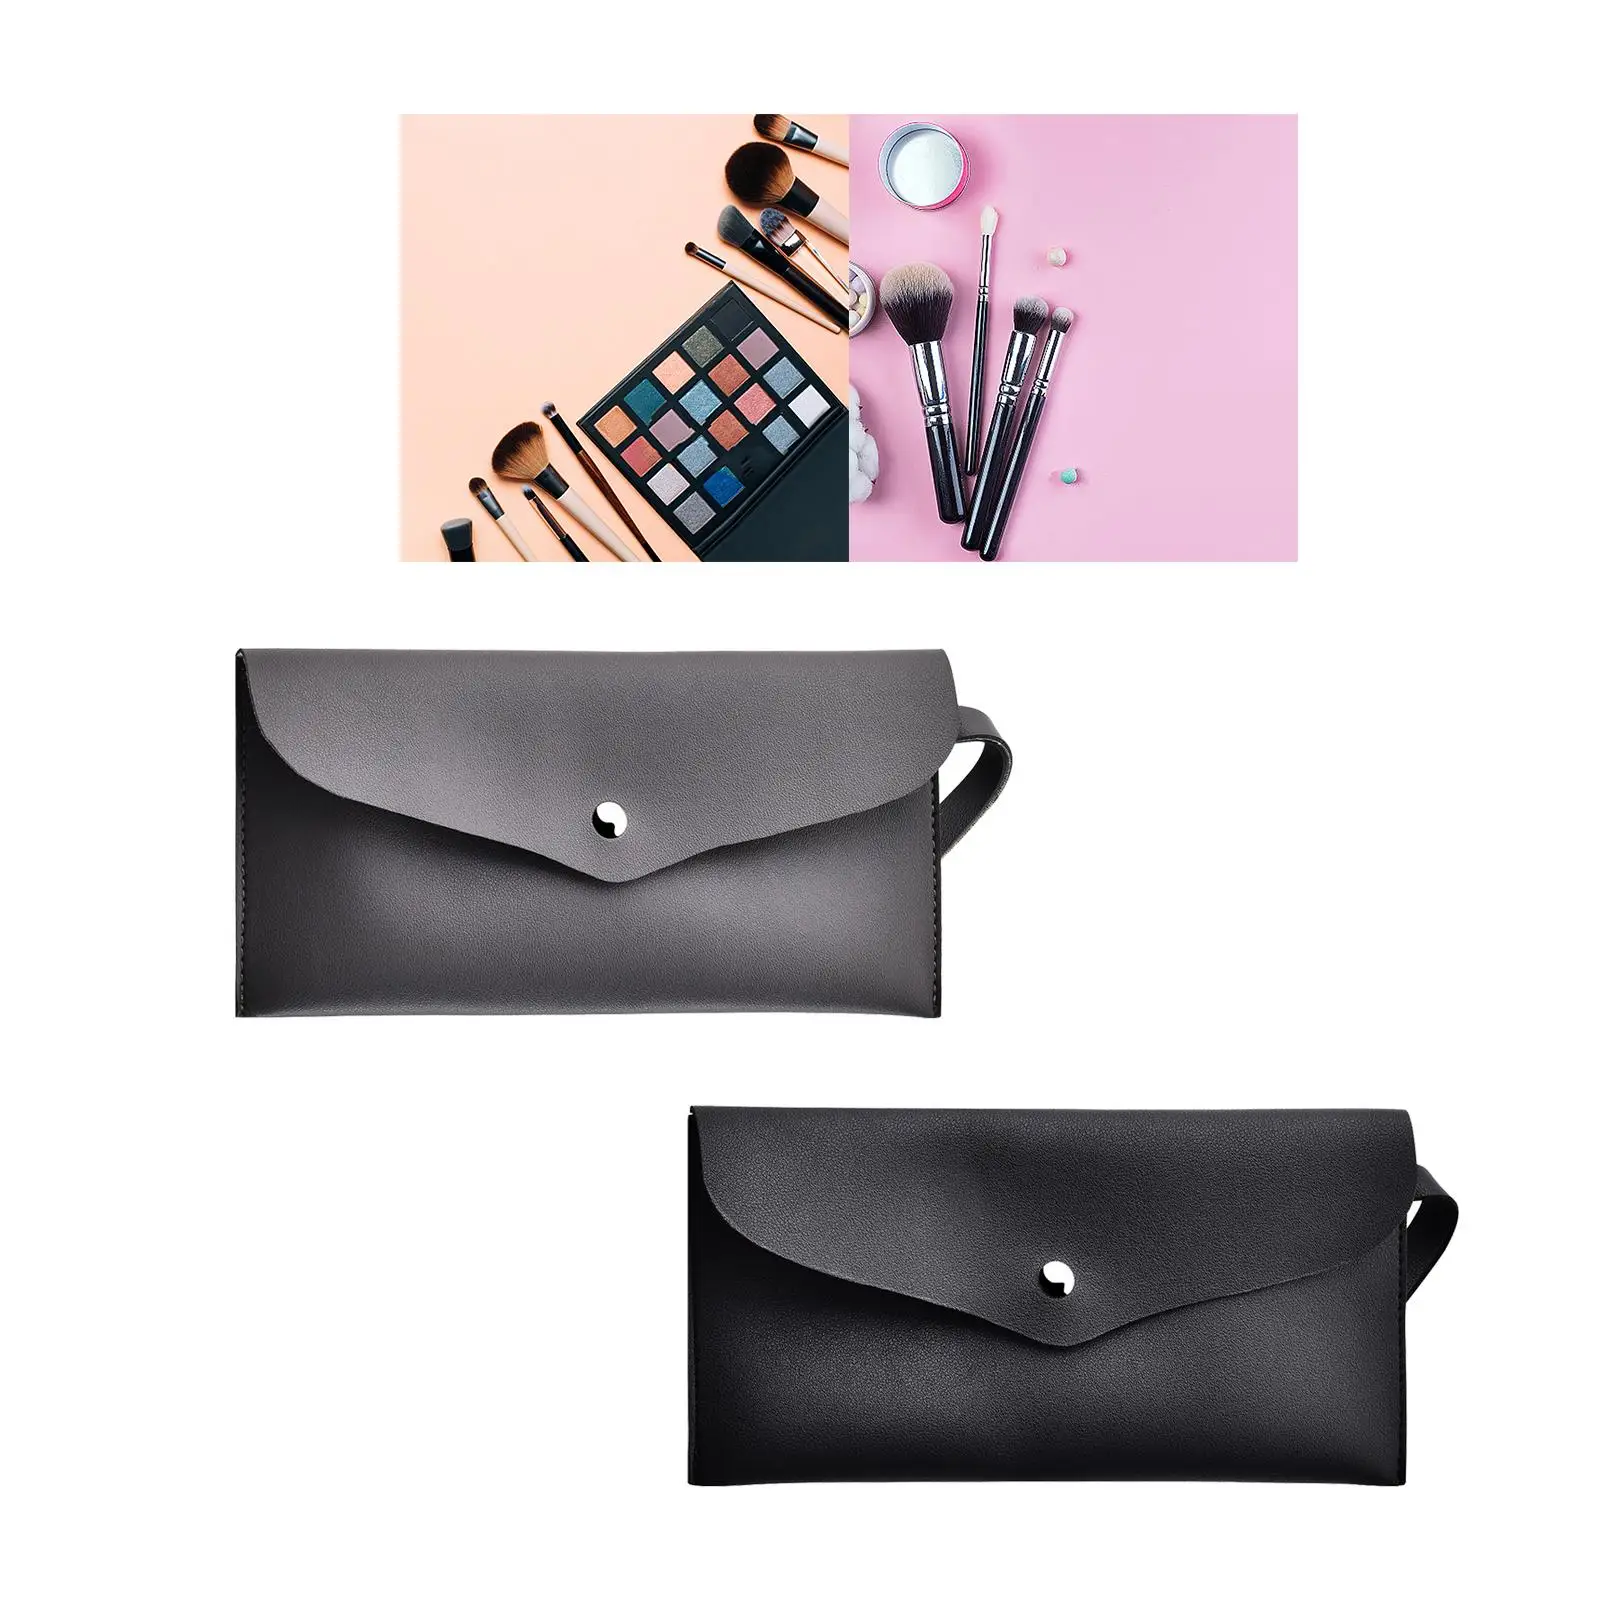 Makeup Brush Holder Handbag Bag PU Leather Measure 9.5x4.7inch Scratch Resistant Water Resistant Stylish Multifunctional Durable